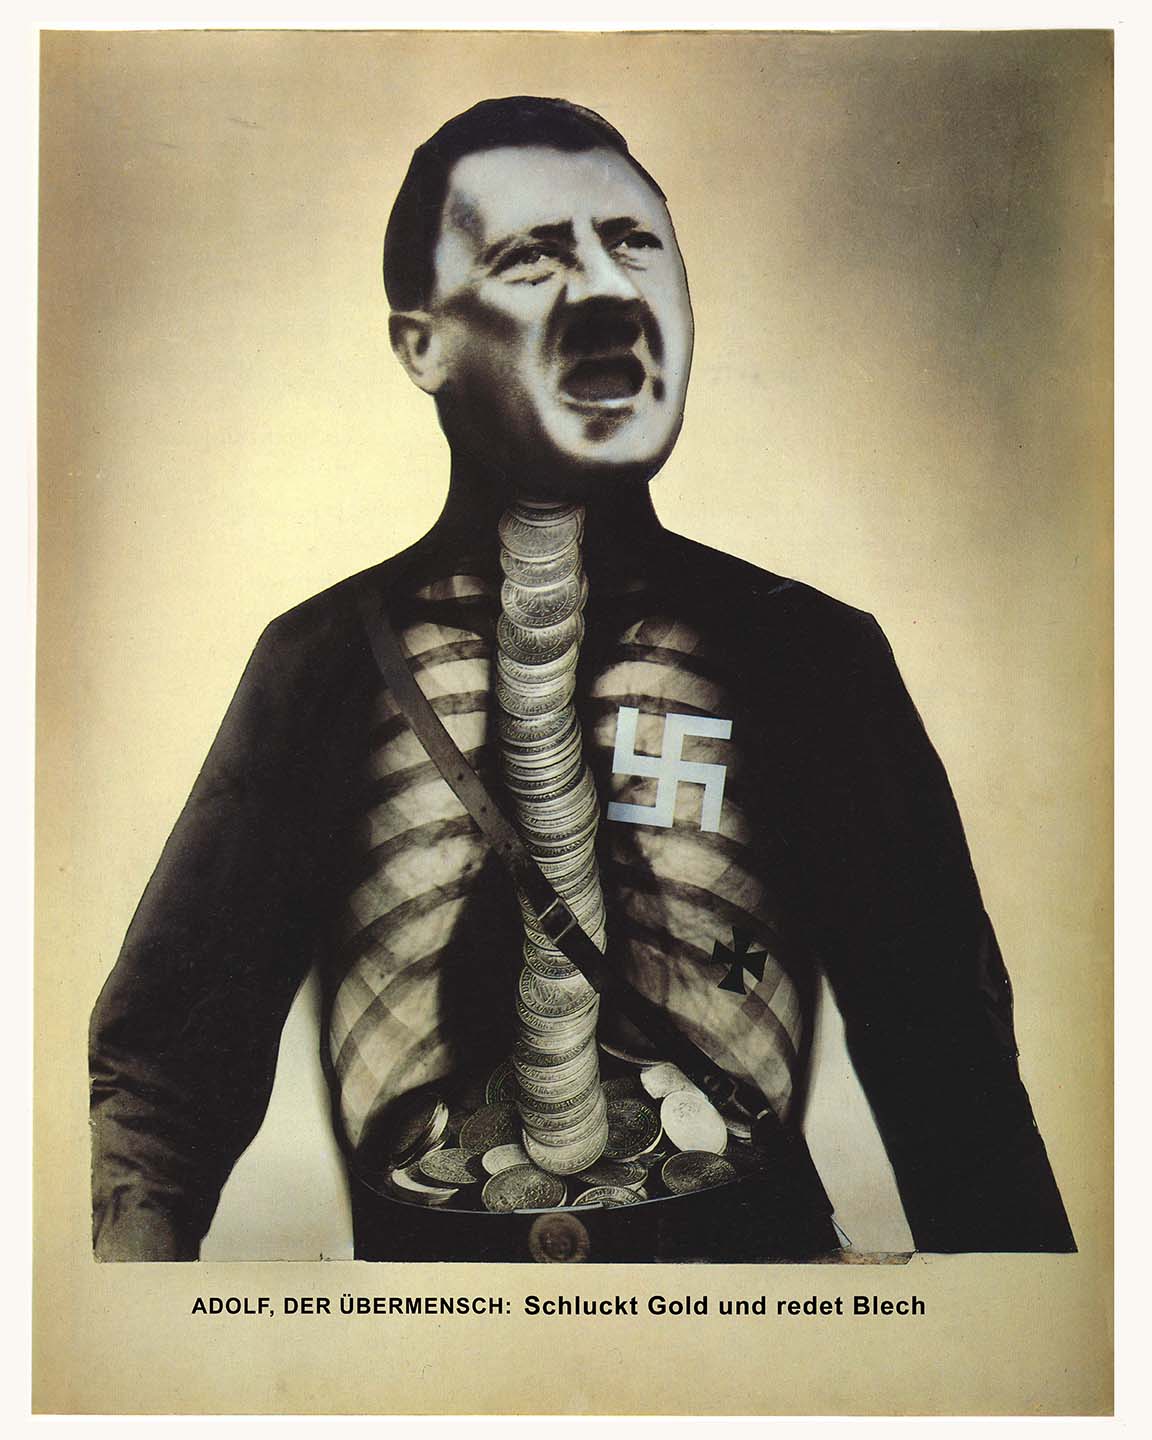 Famous Antifascist Poster Sale. Buy John Heartfield "Superman Dictators Truth" - Buy a political masterpiece,